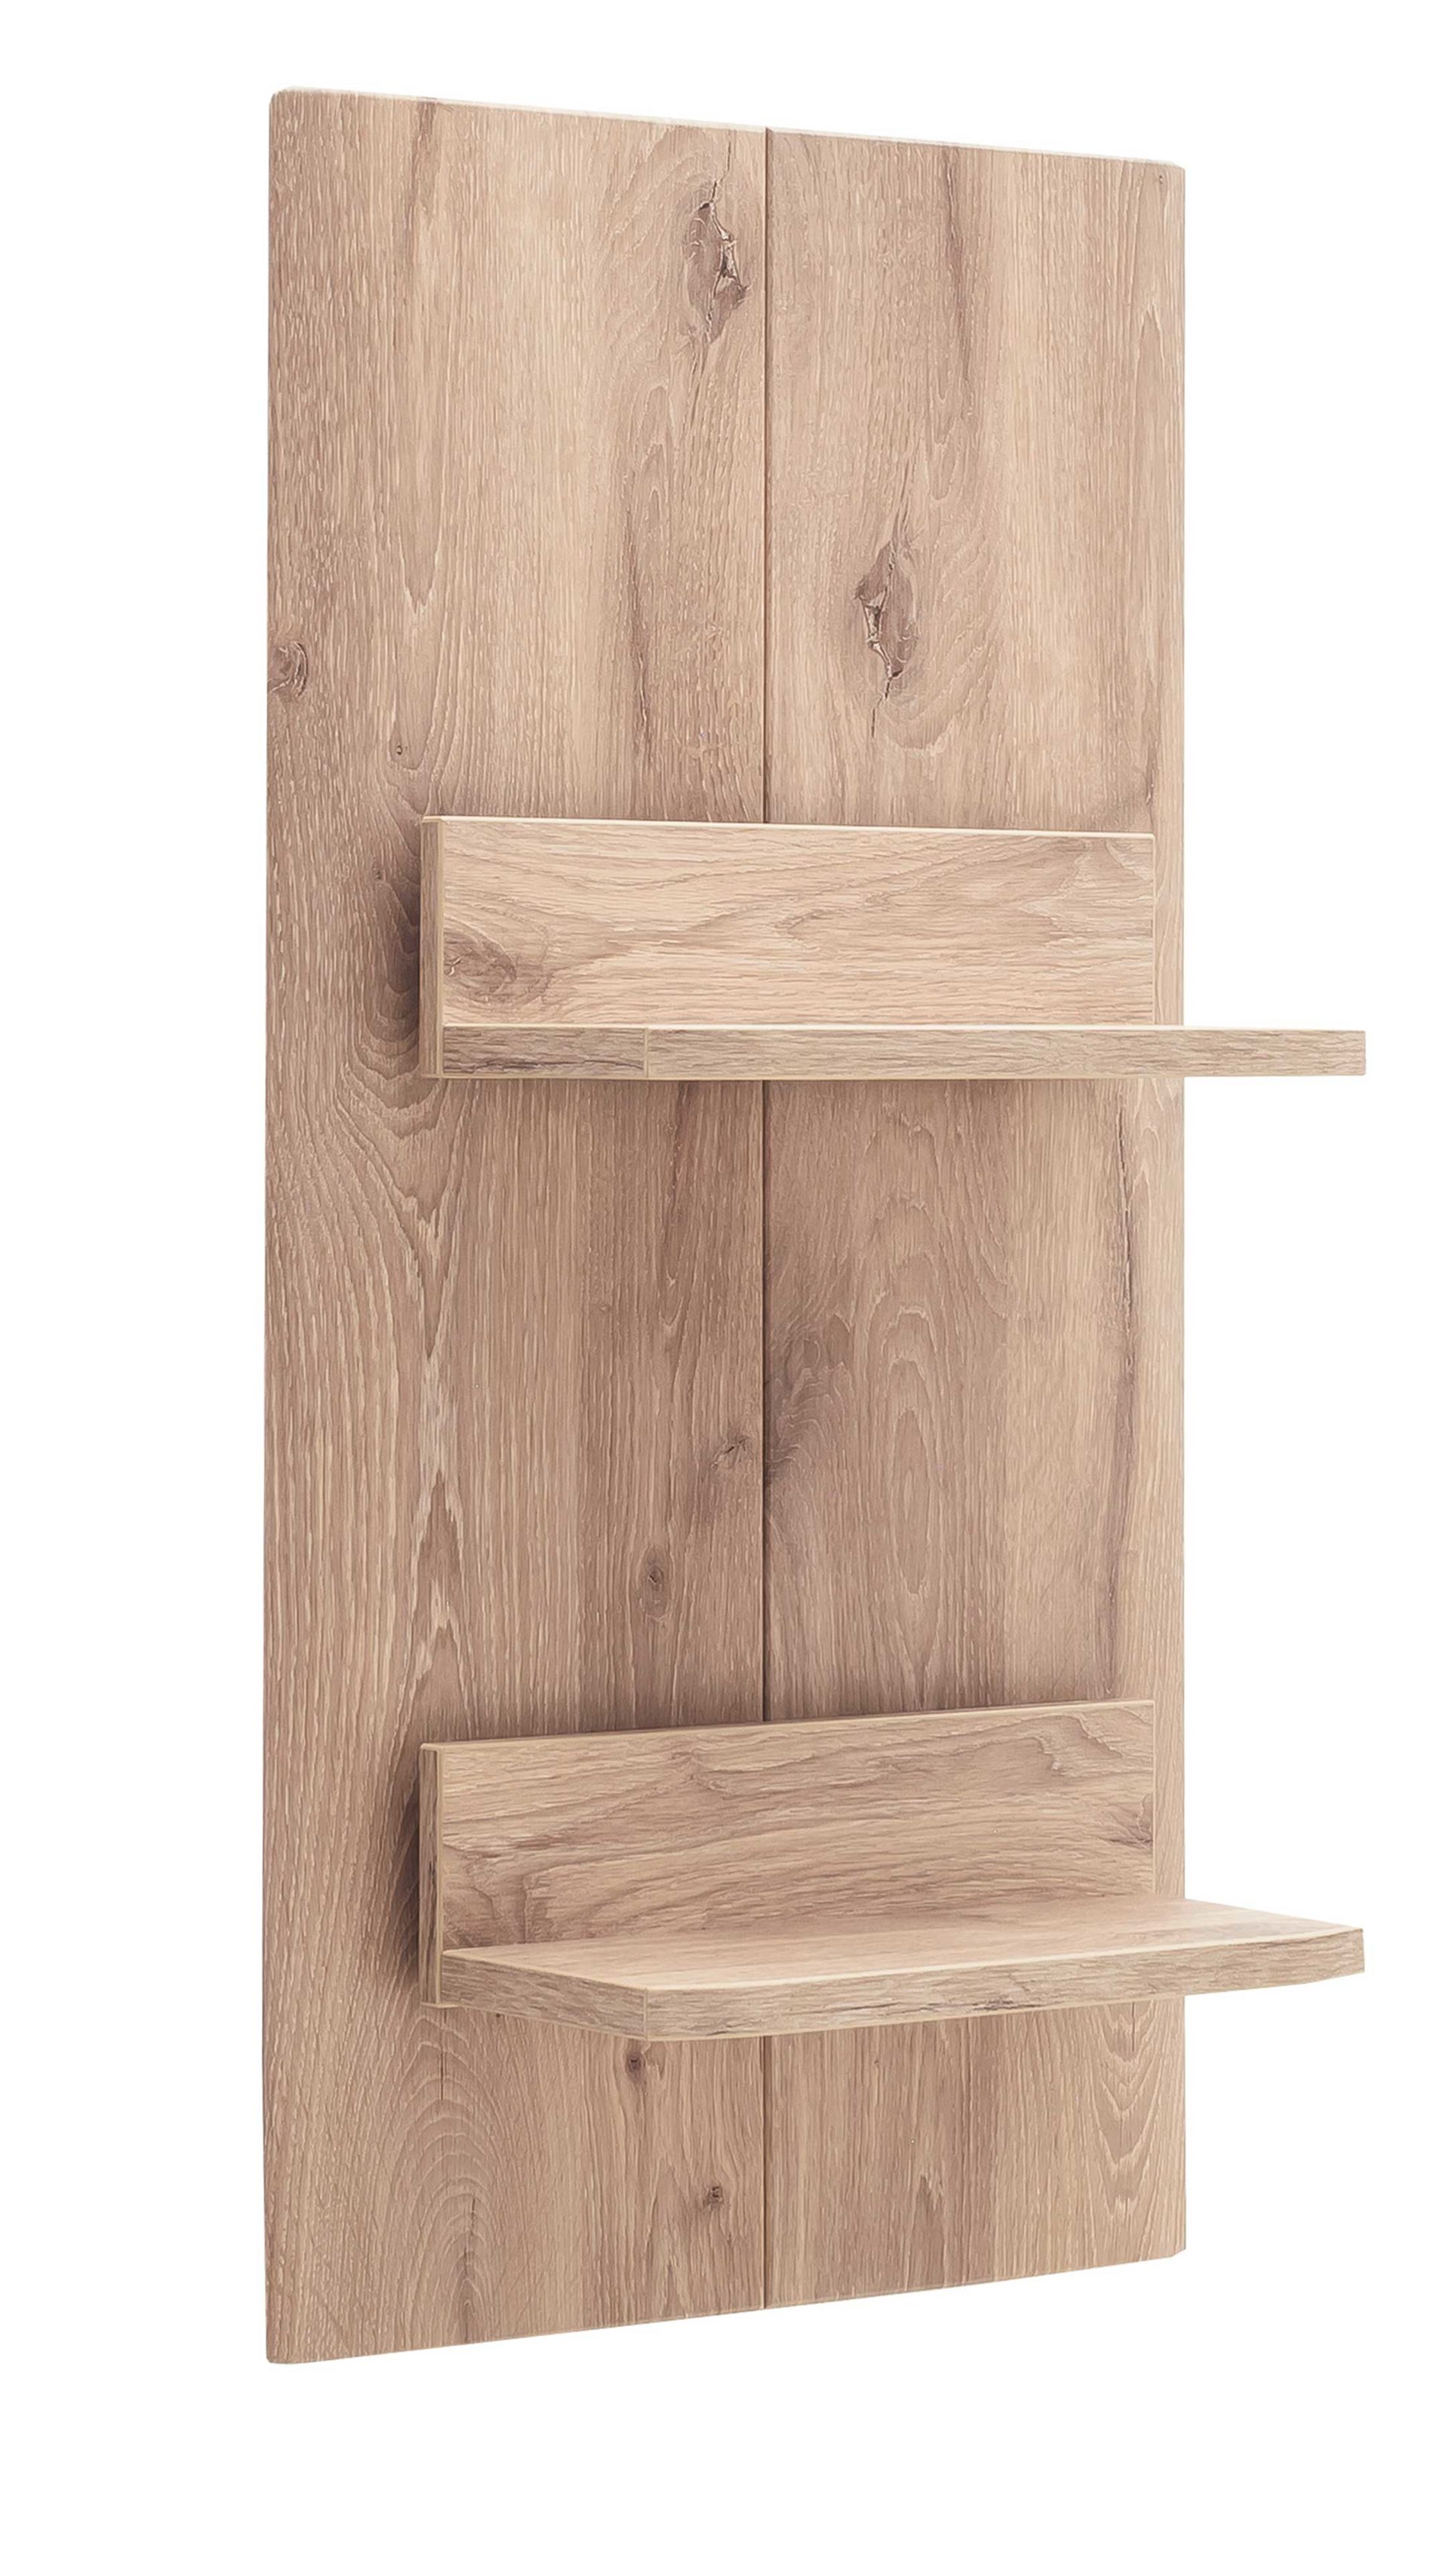 Wandregal Mca furniture aus Holz in Holzfarben Wohnprogramm Prato - Wandregal Viking Oak - Höhe ca. 96 cm